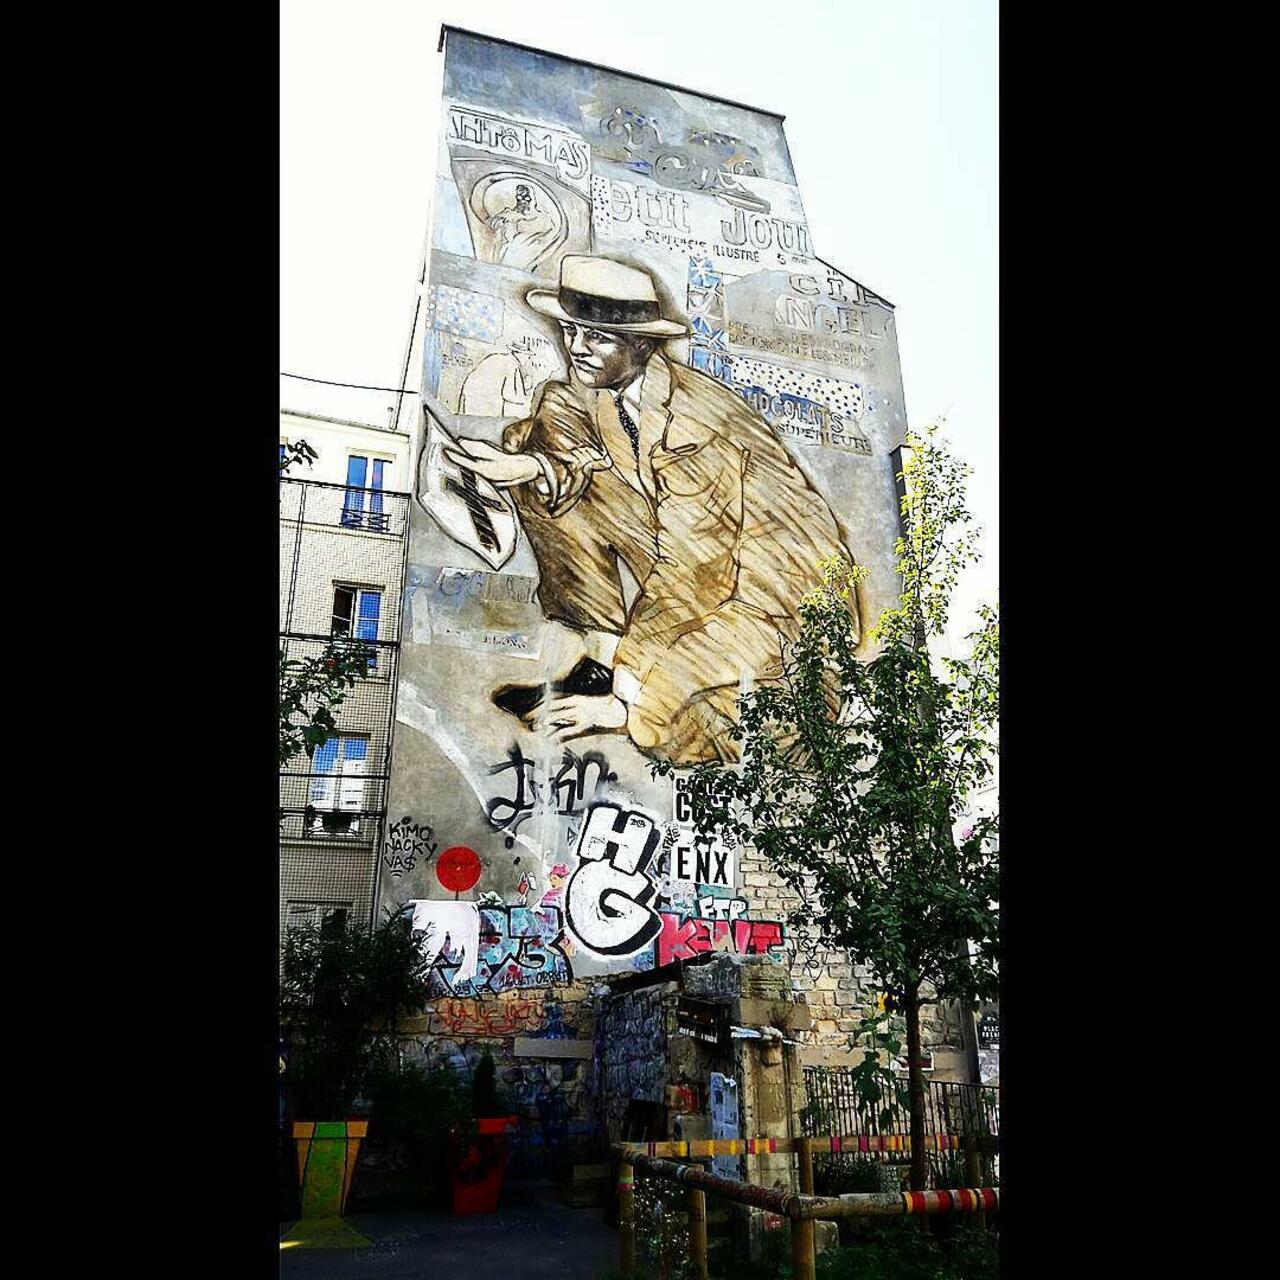 #Paris #graffiti photo by @anne.batellier http://ift.tt/1Mkilgk #StreetArt http://t.co/Y6CycJpr94